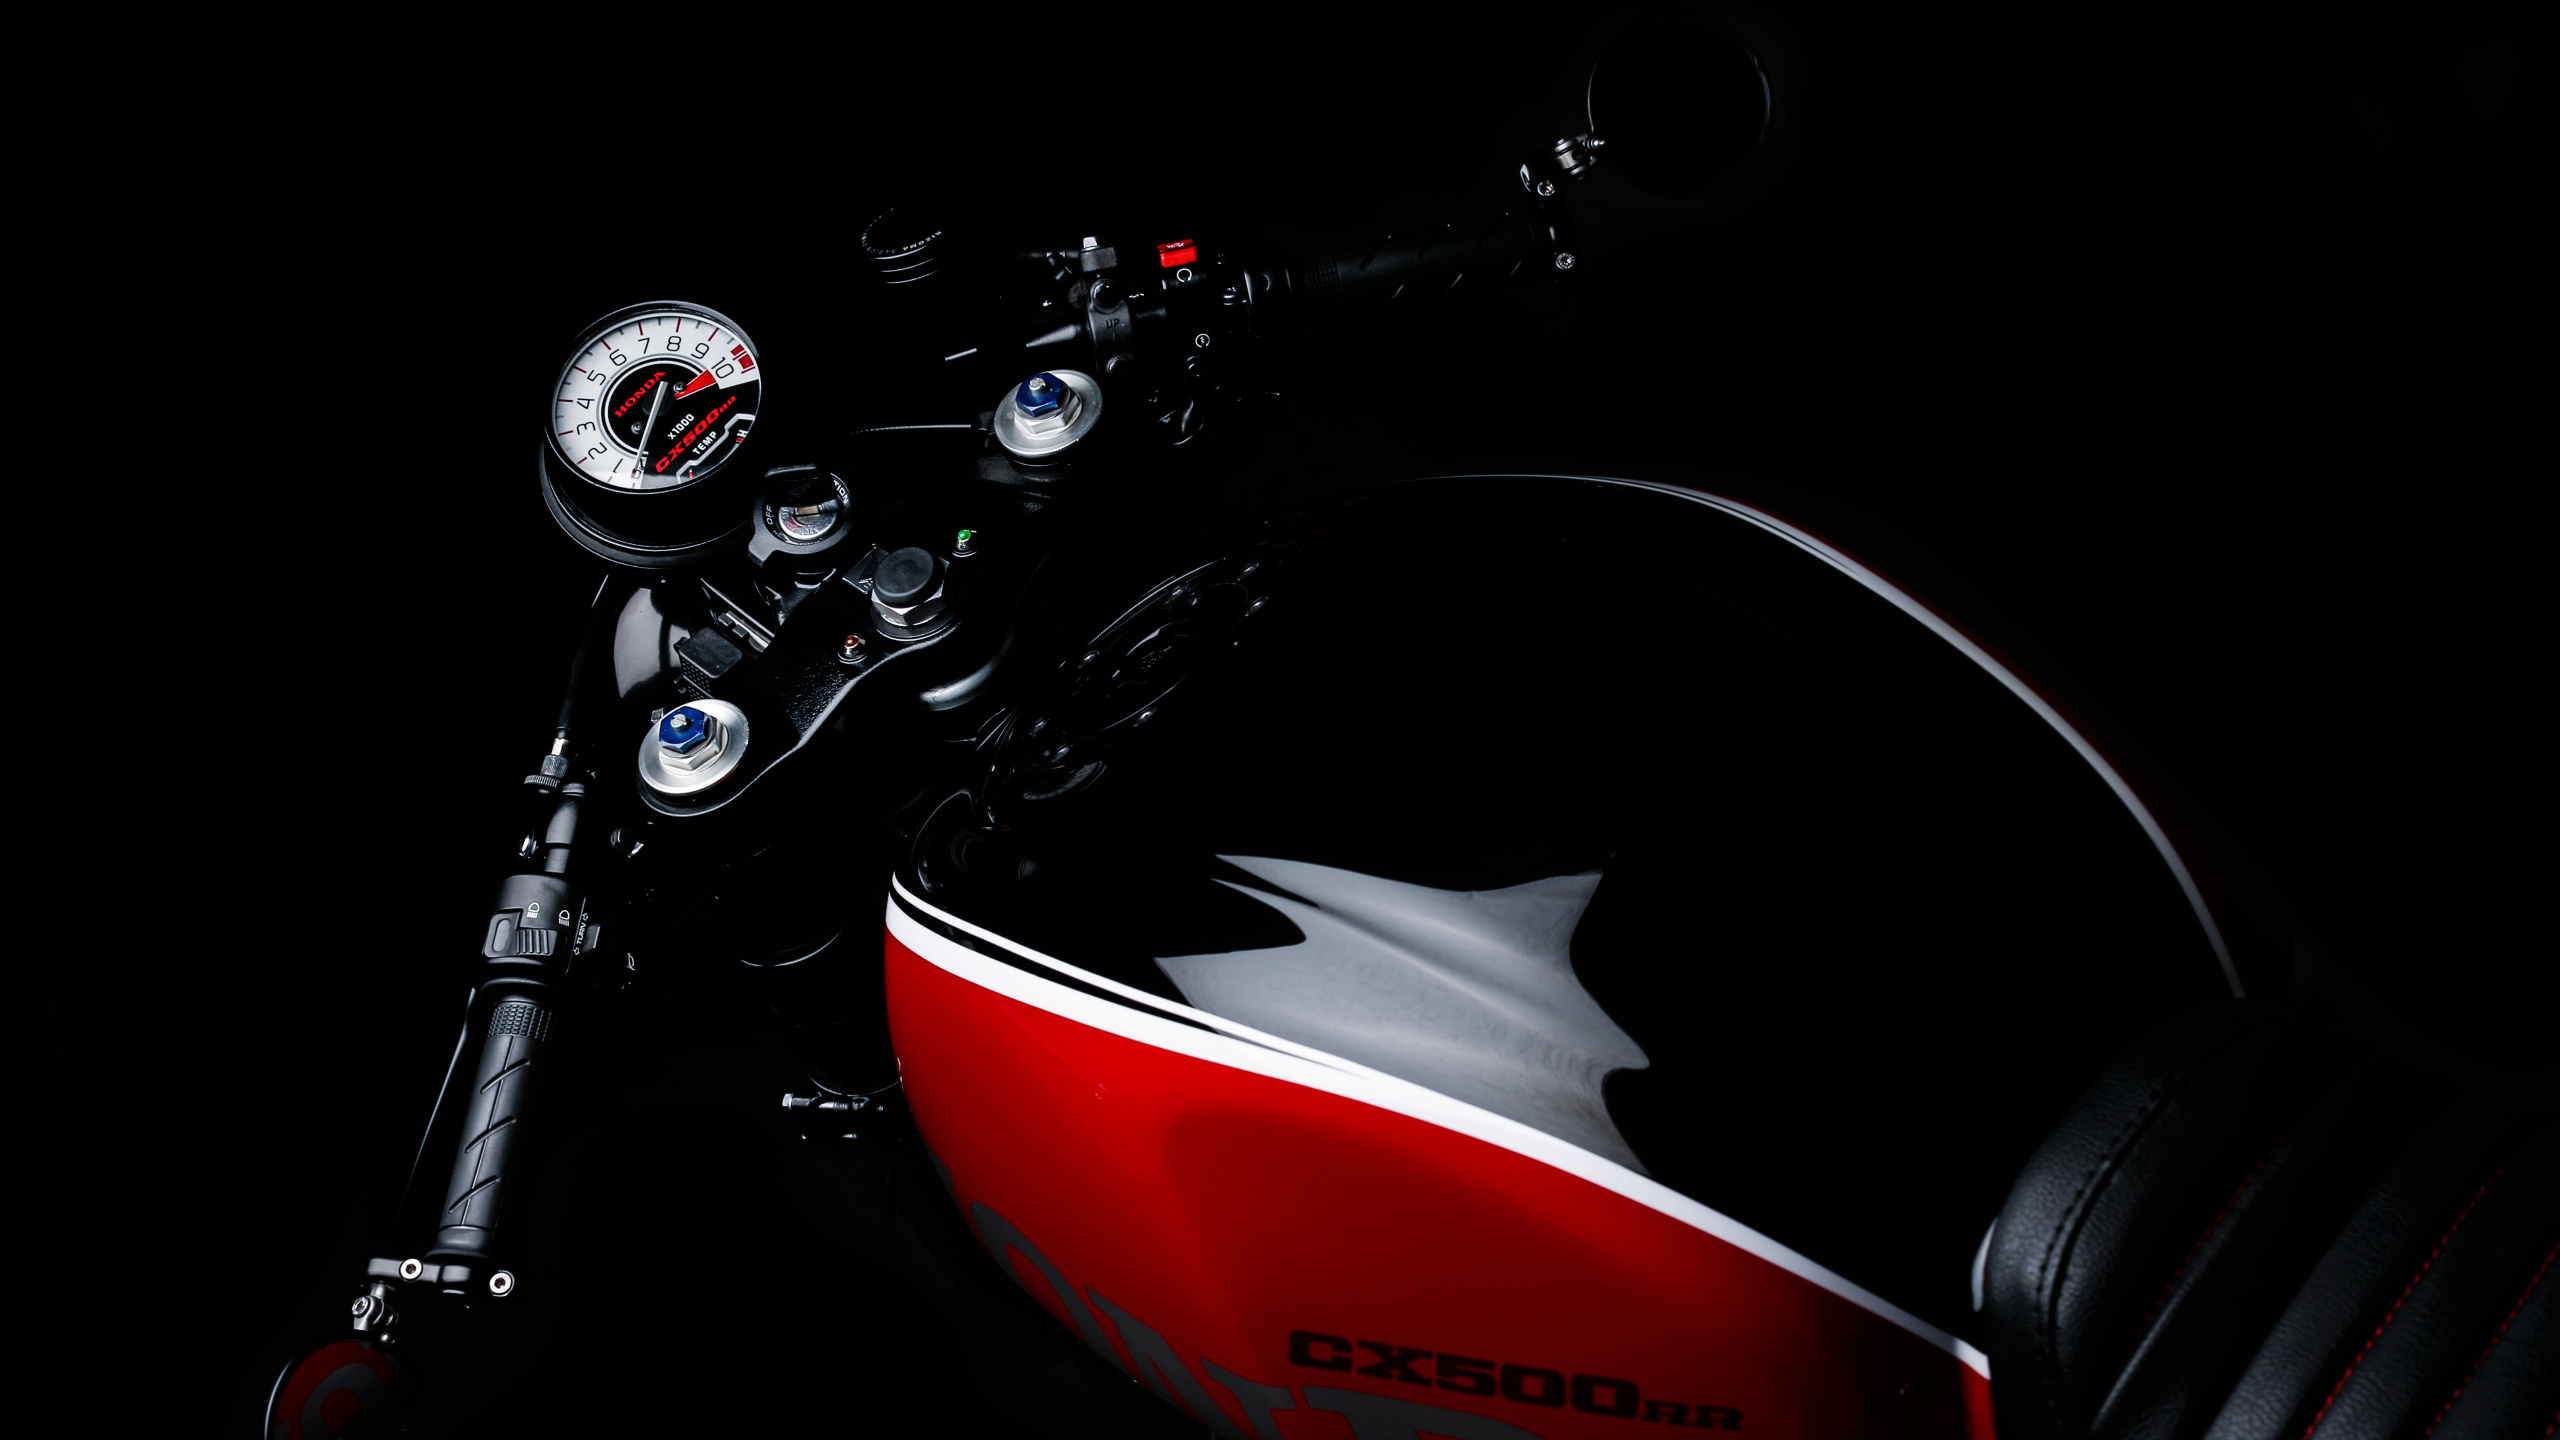 Rotes Und Schwarzes Honda-Motorrad. Wallpaper in 2560x1440 Resolution